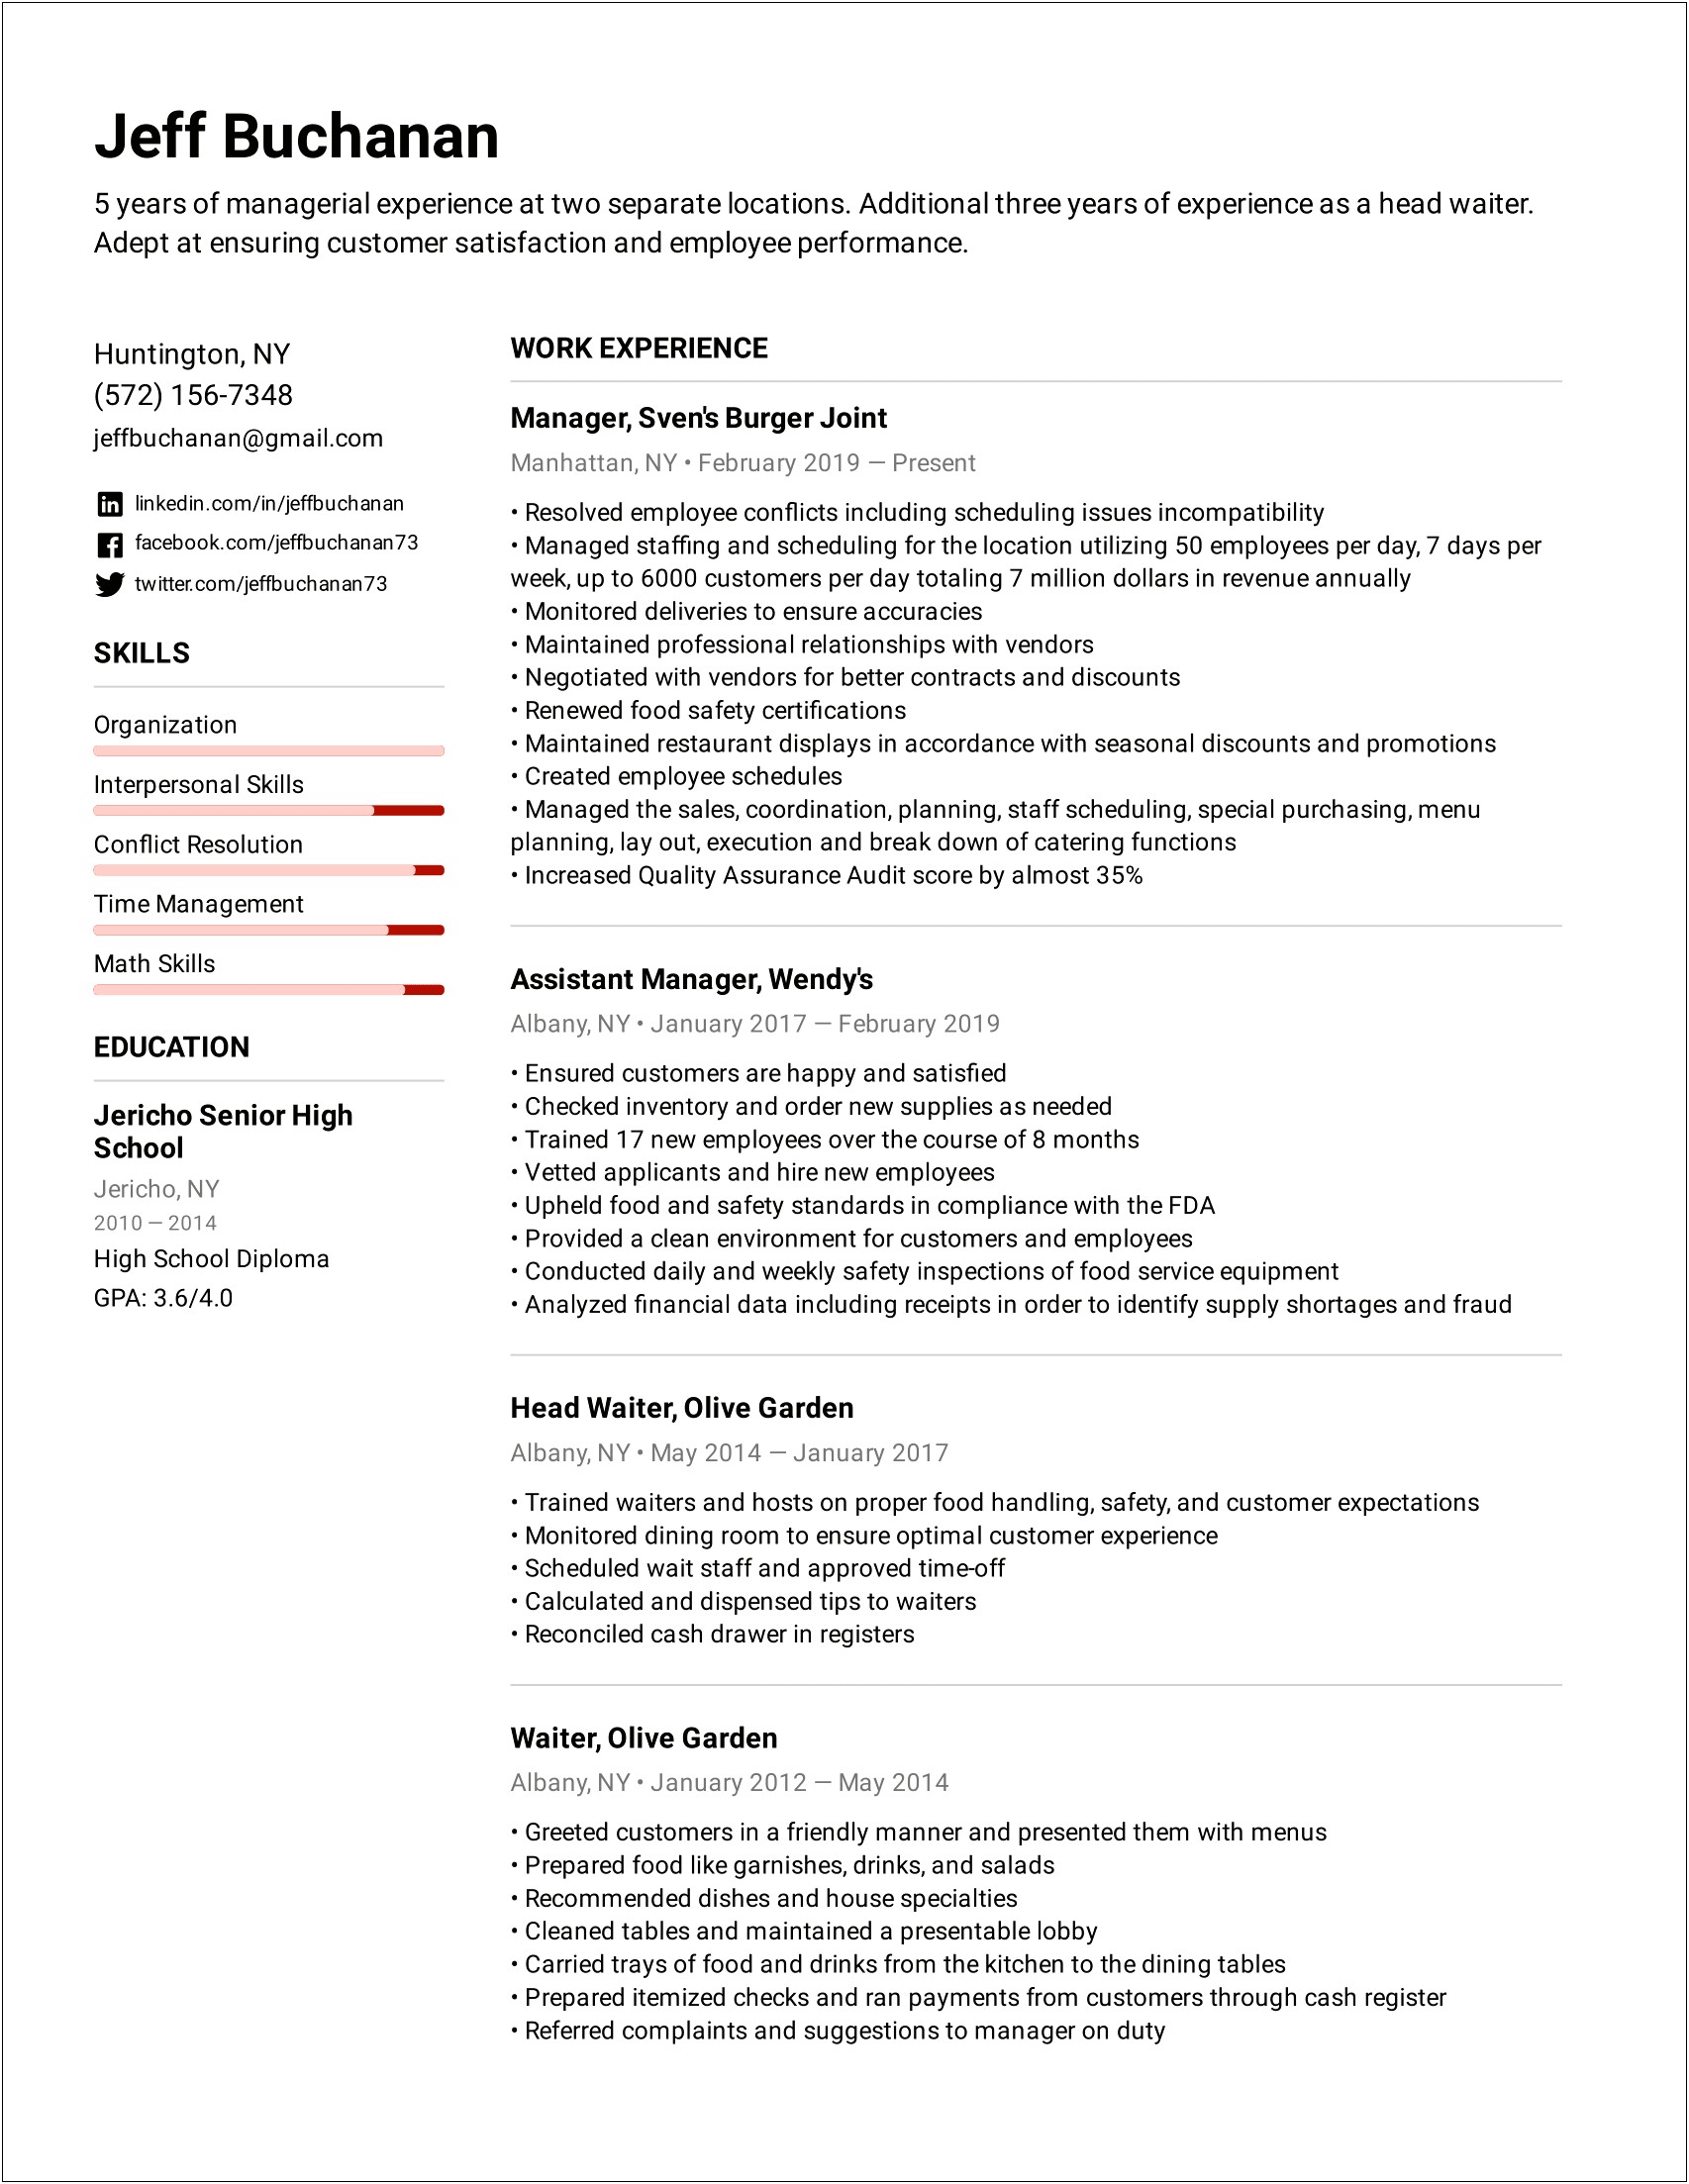 Job Description For Wait Staff On Resume